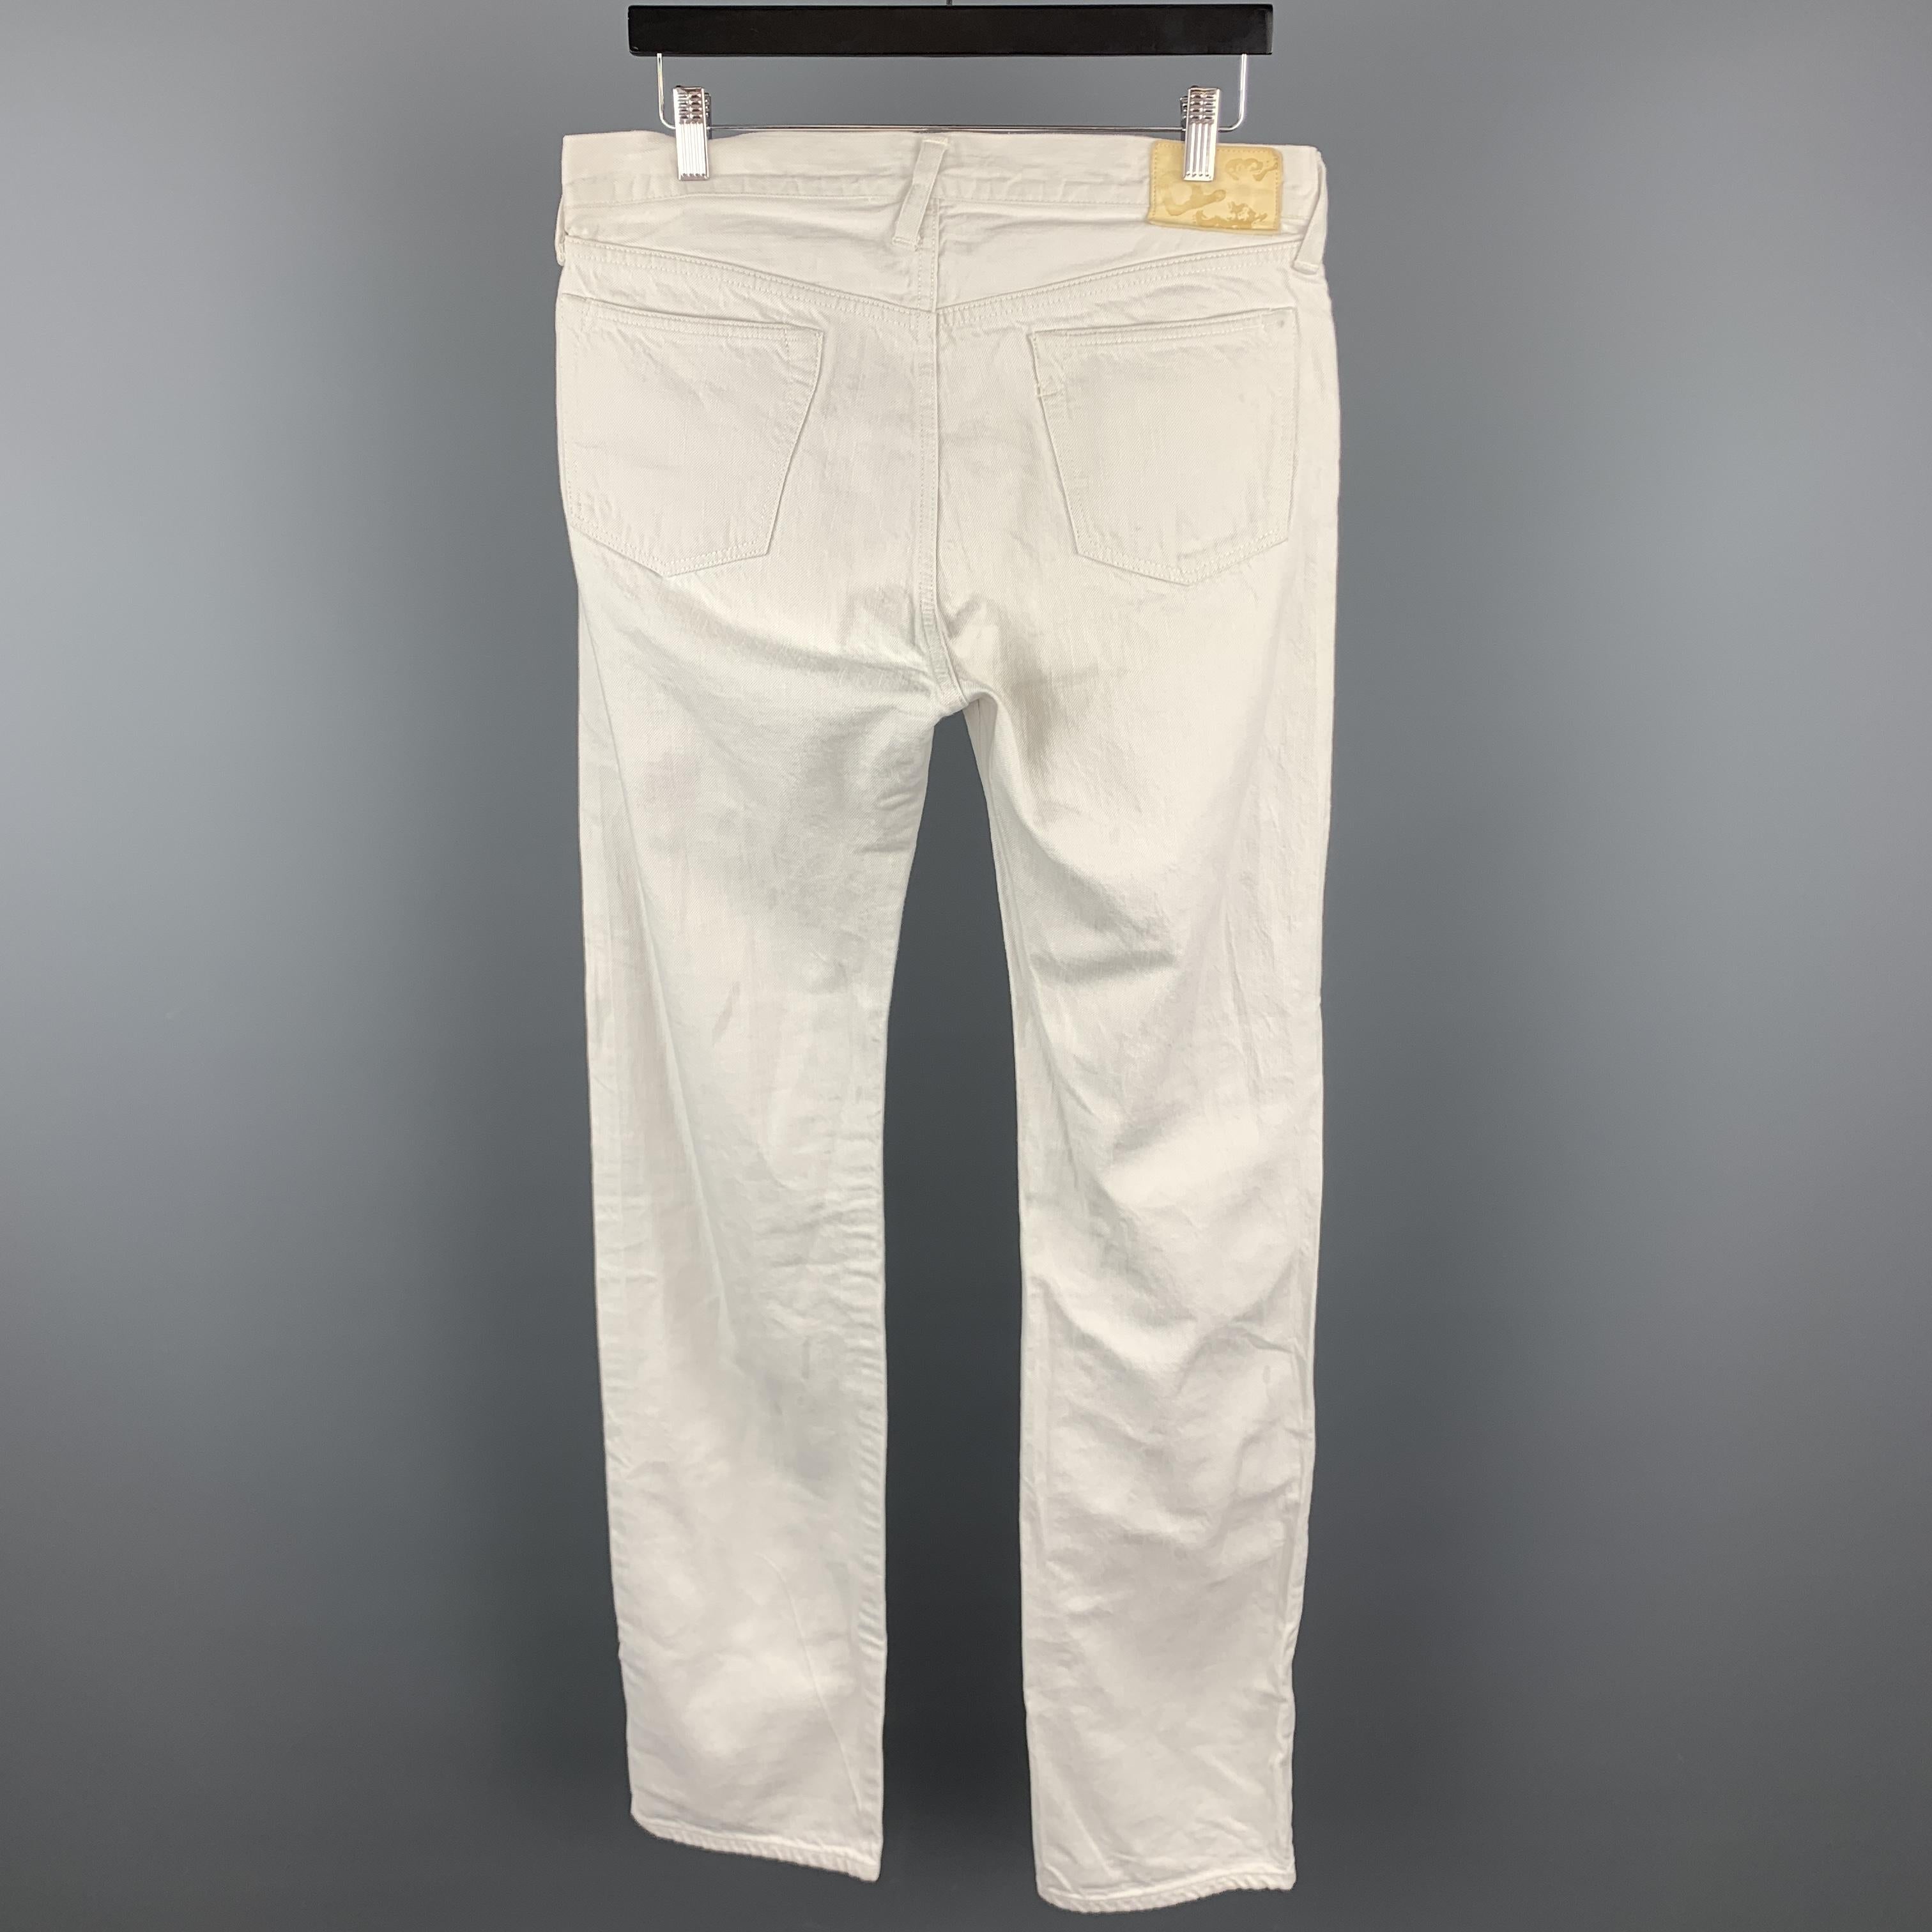 Beige 45rpm Size 32 x 36 Cream Solid Cotton Selvedge Denim Button Fly Jeans